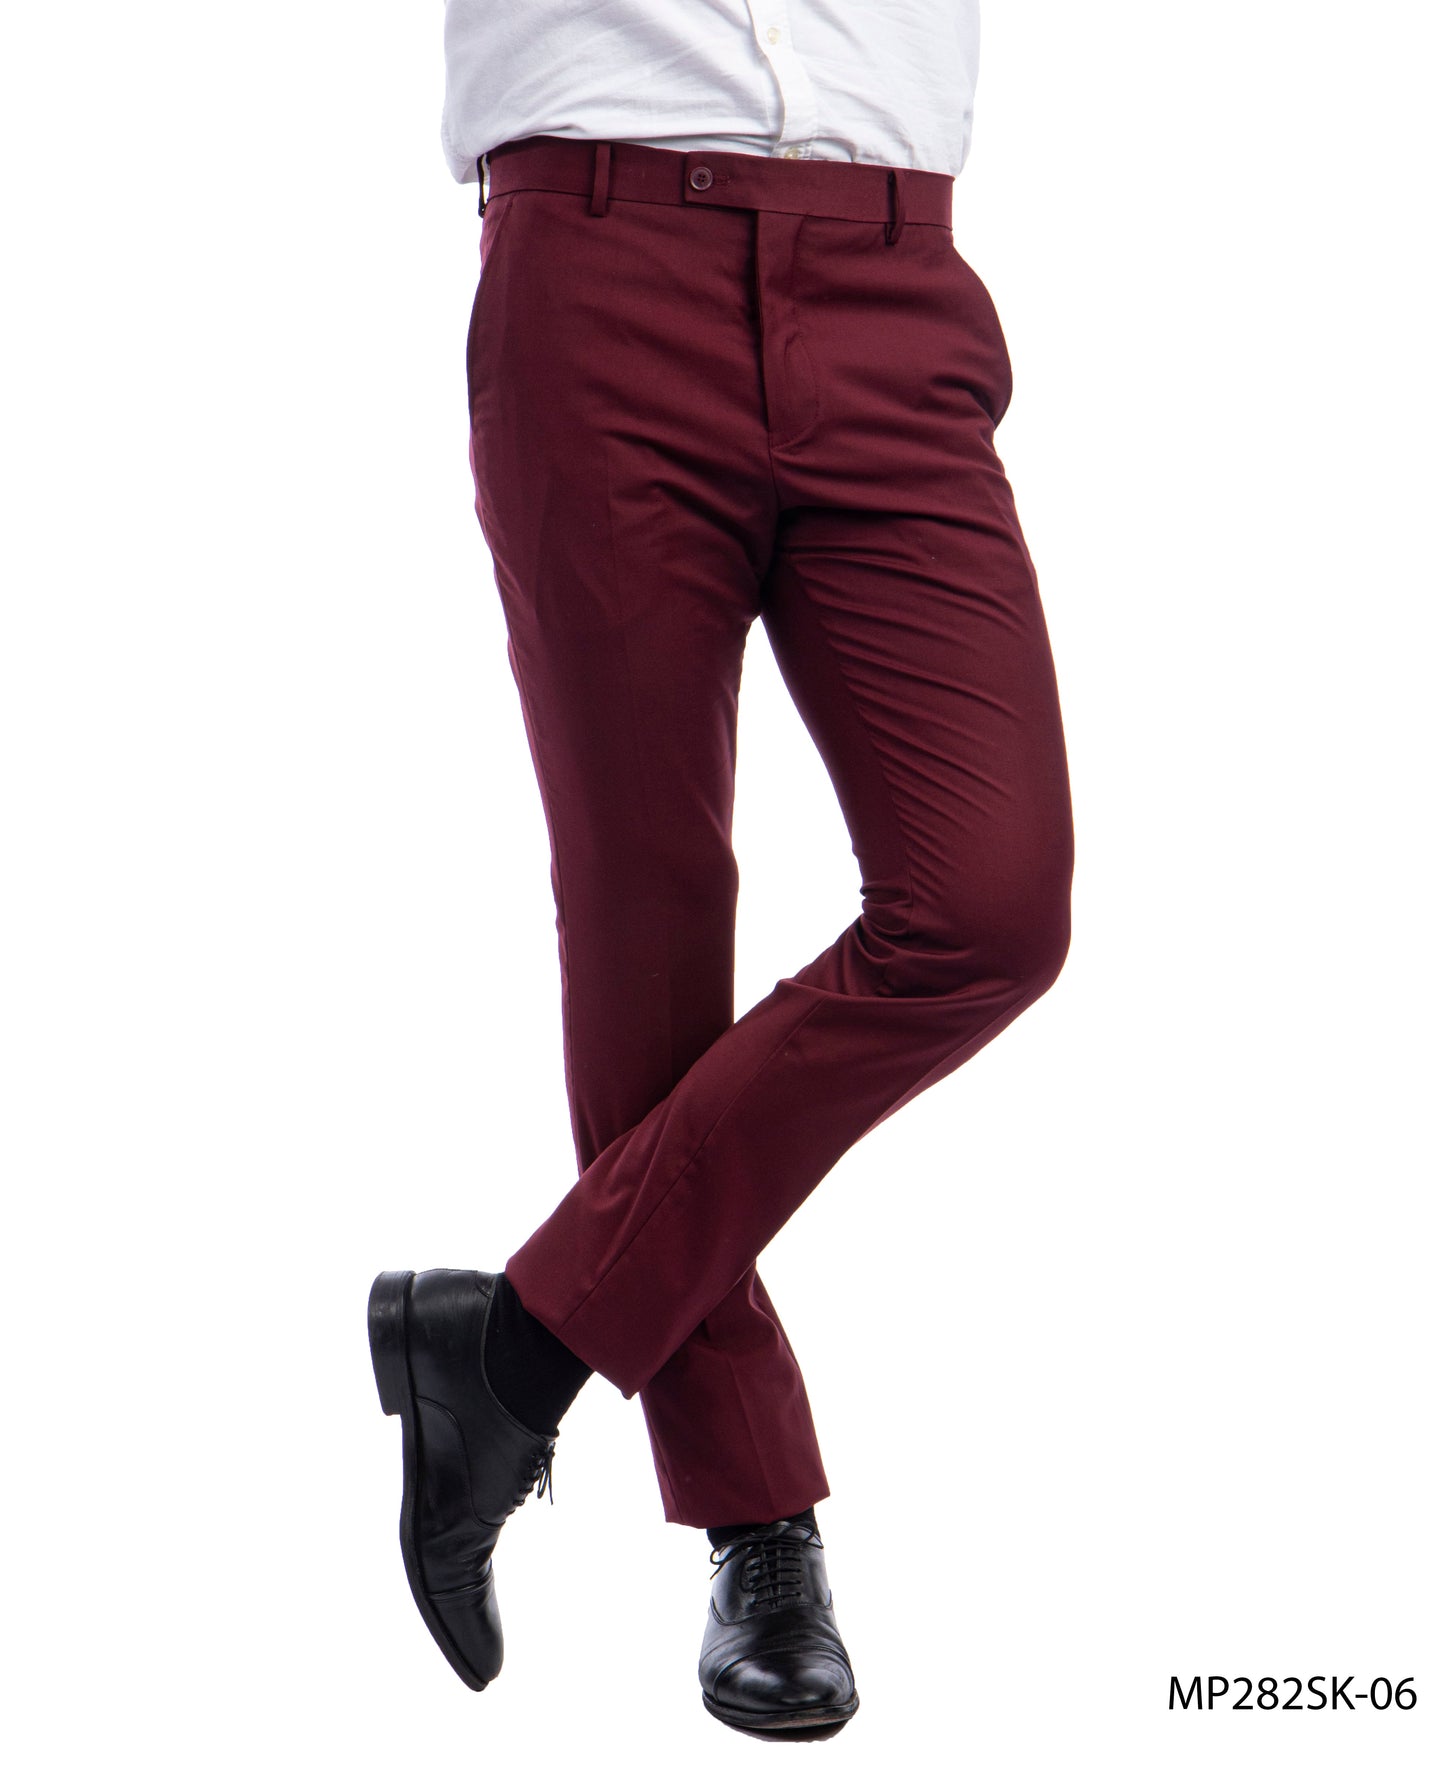 Sean Alexander Mens Burgundy Performance Stretch Dress Pants MP282SK-06